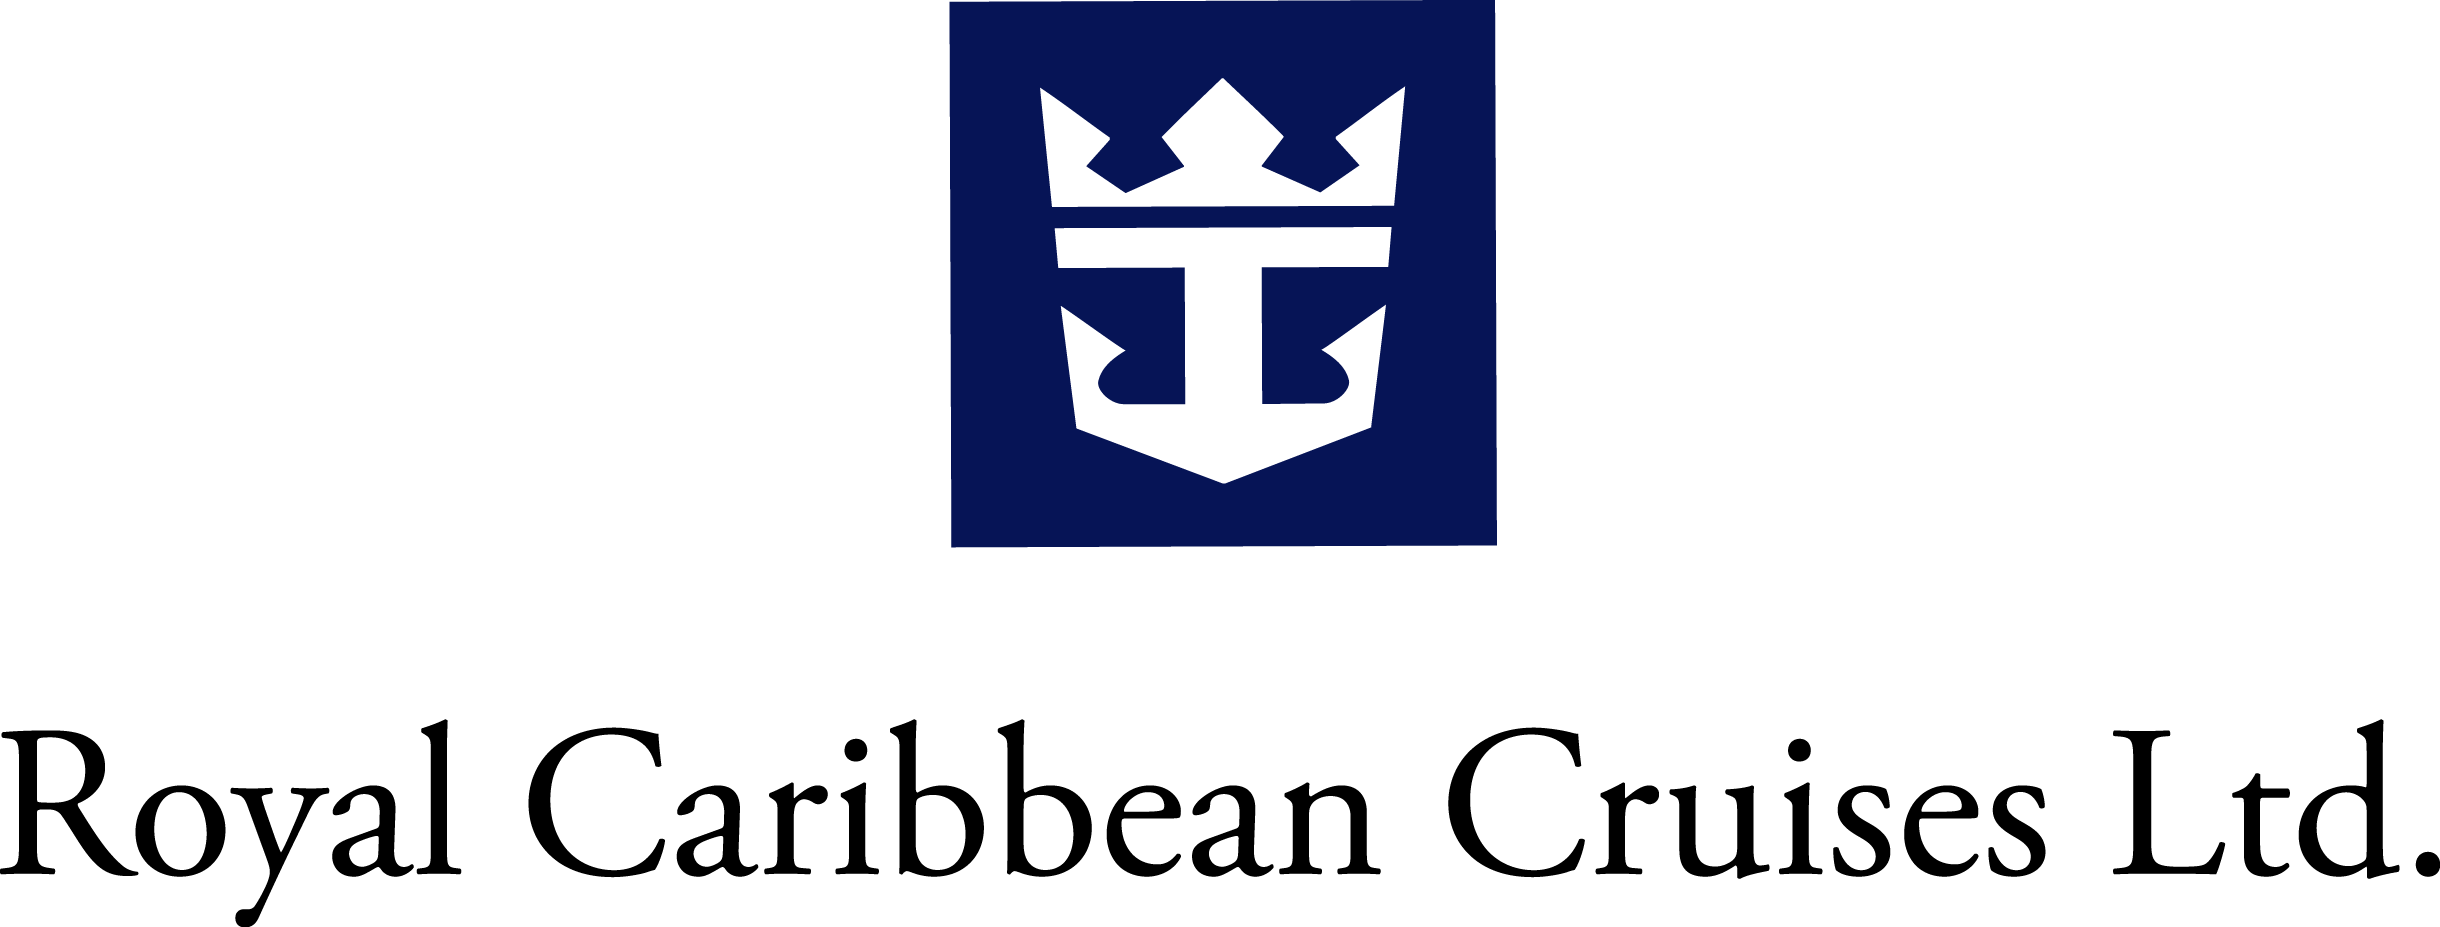 royal caribbean cruises ltd 10k